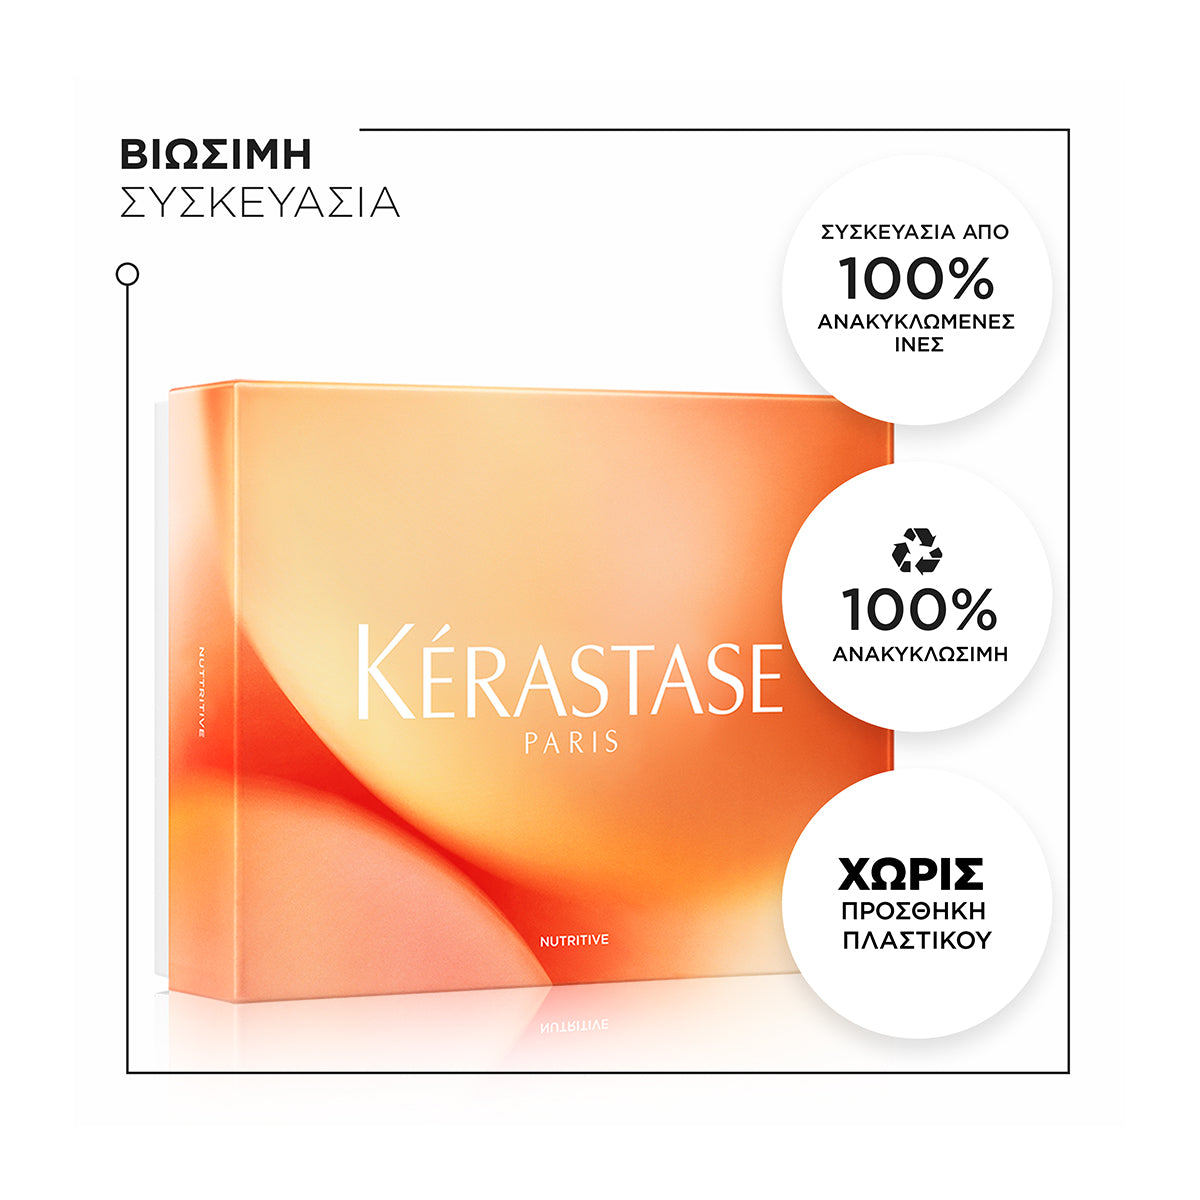 Kerastase Nutritive Limited Edition Σετ Περιποίησης για Πολύ Ξηρά Μαλλιά (Σαμπουάν 250ml,Μάσκα 200ml)